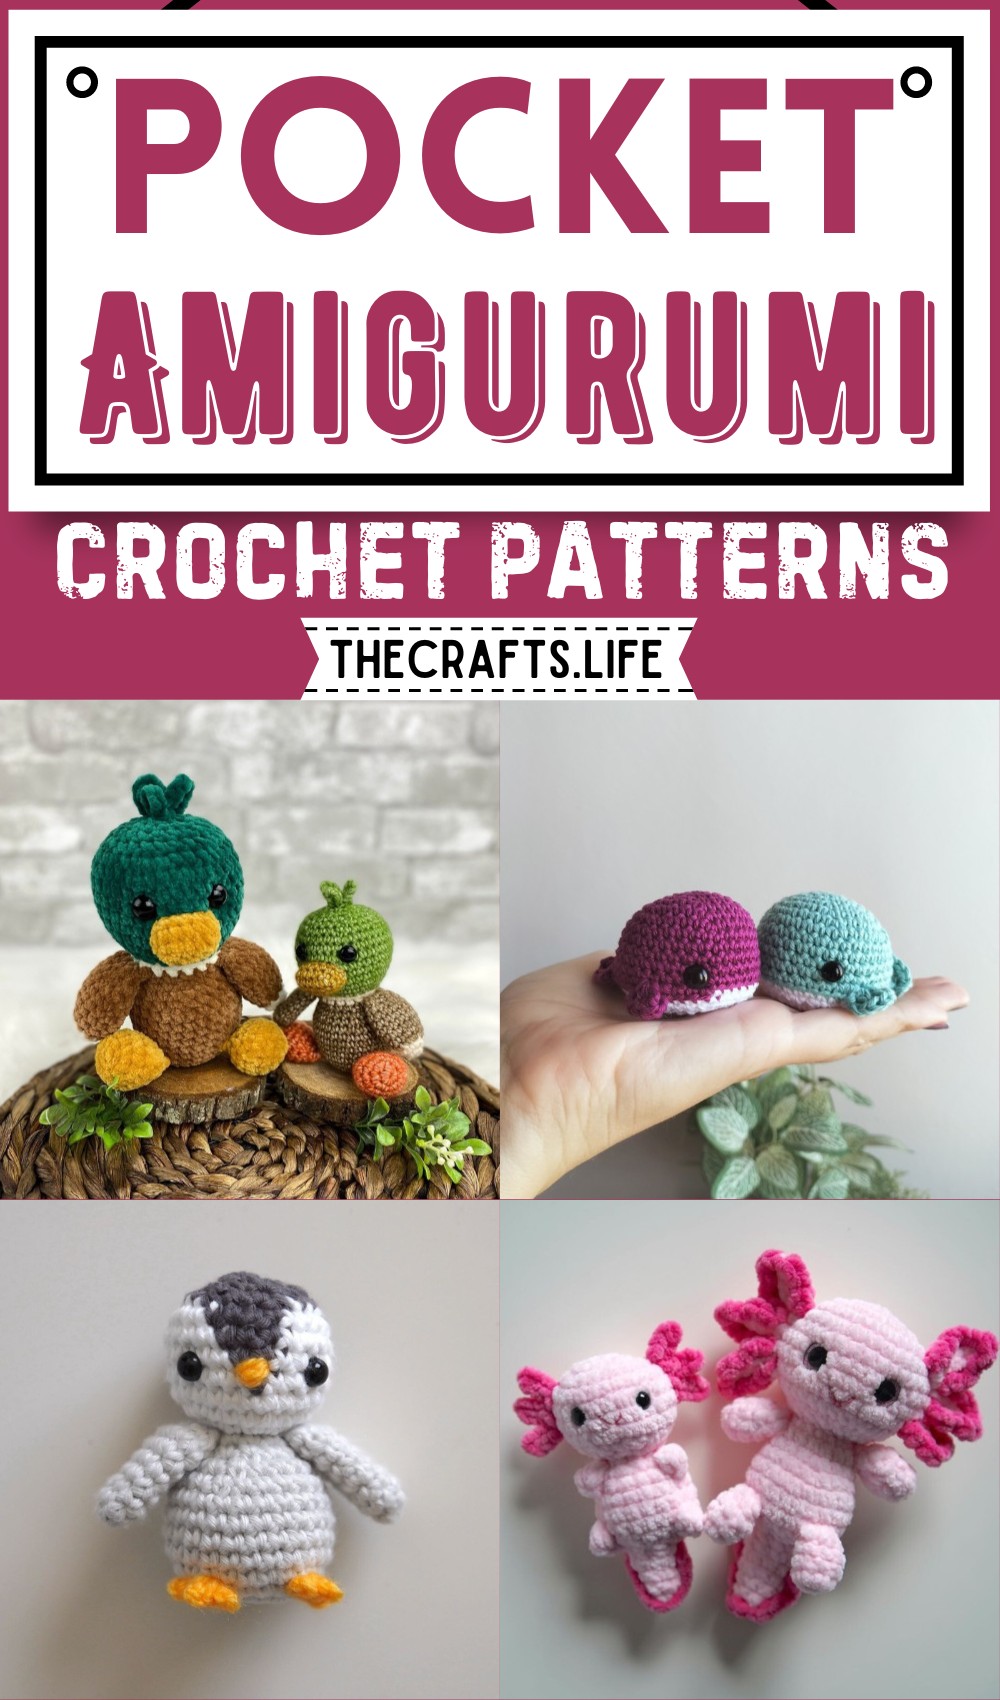 Cute Crochet Pocket Amigurumi Patterns